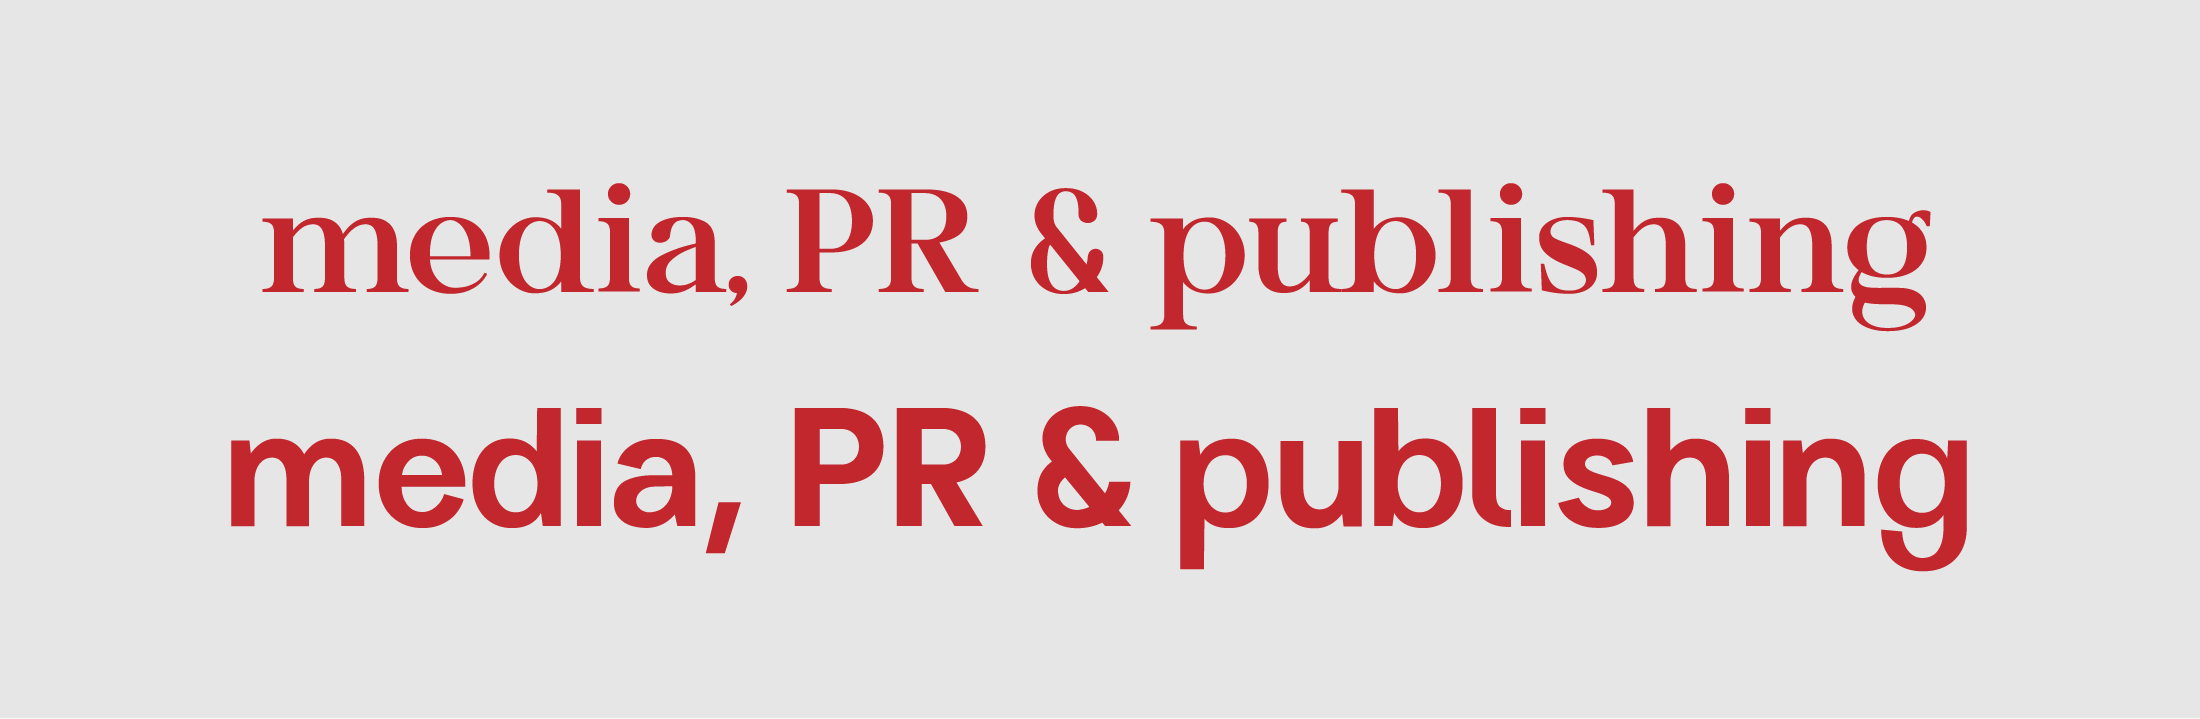 font for media, PR, and publishing logo designs